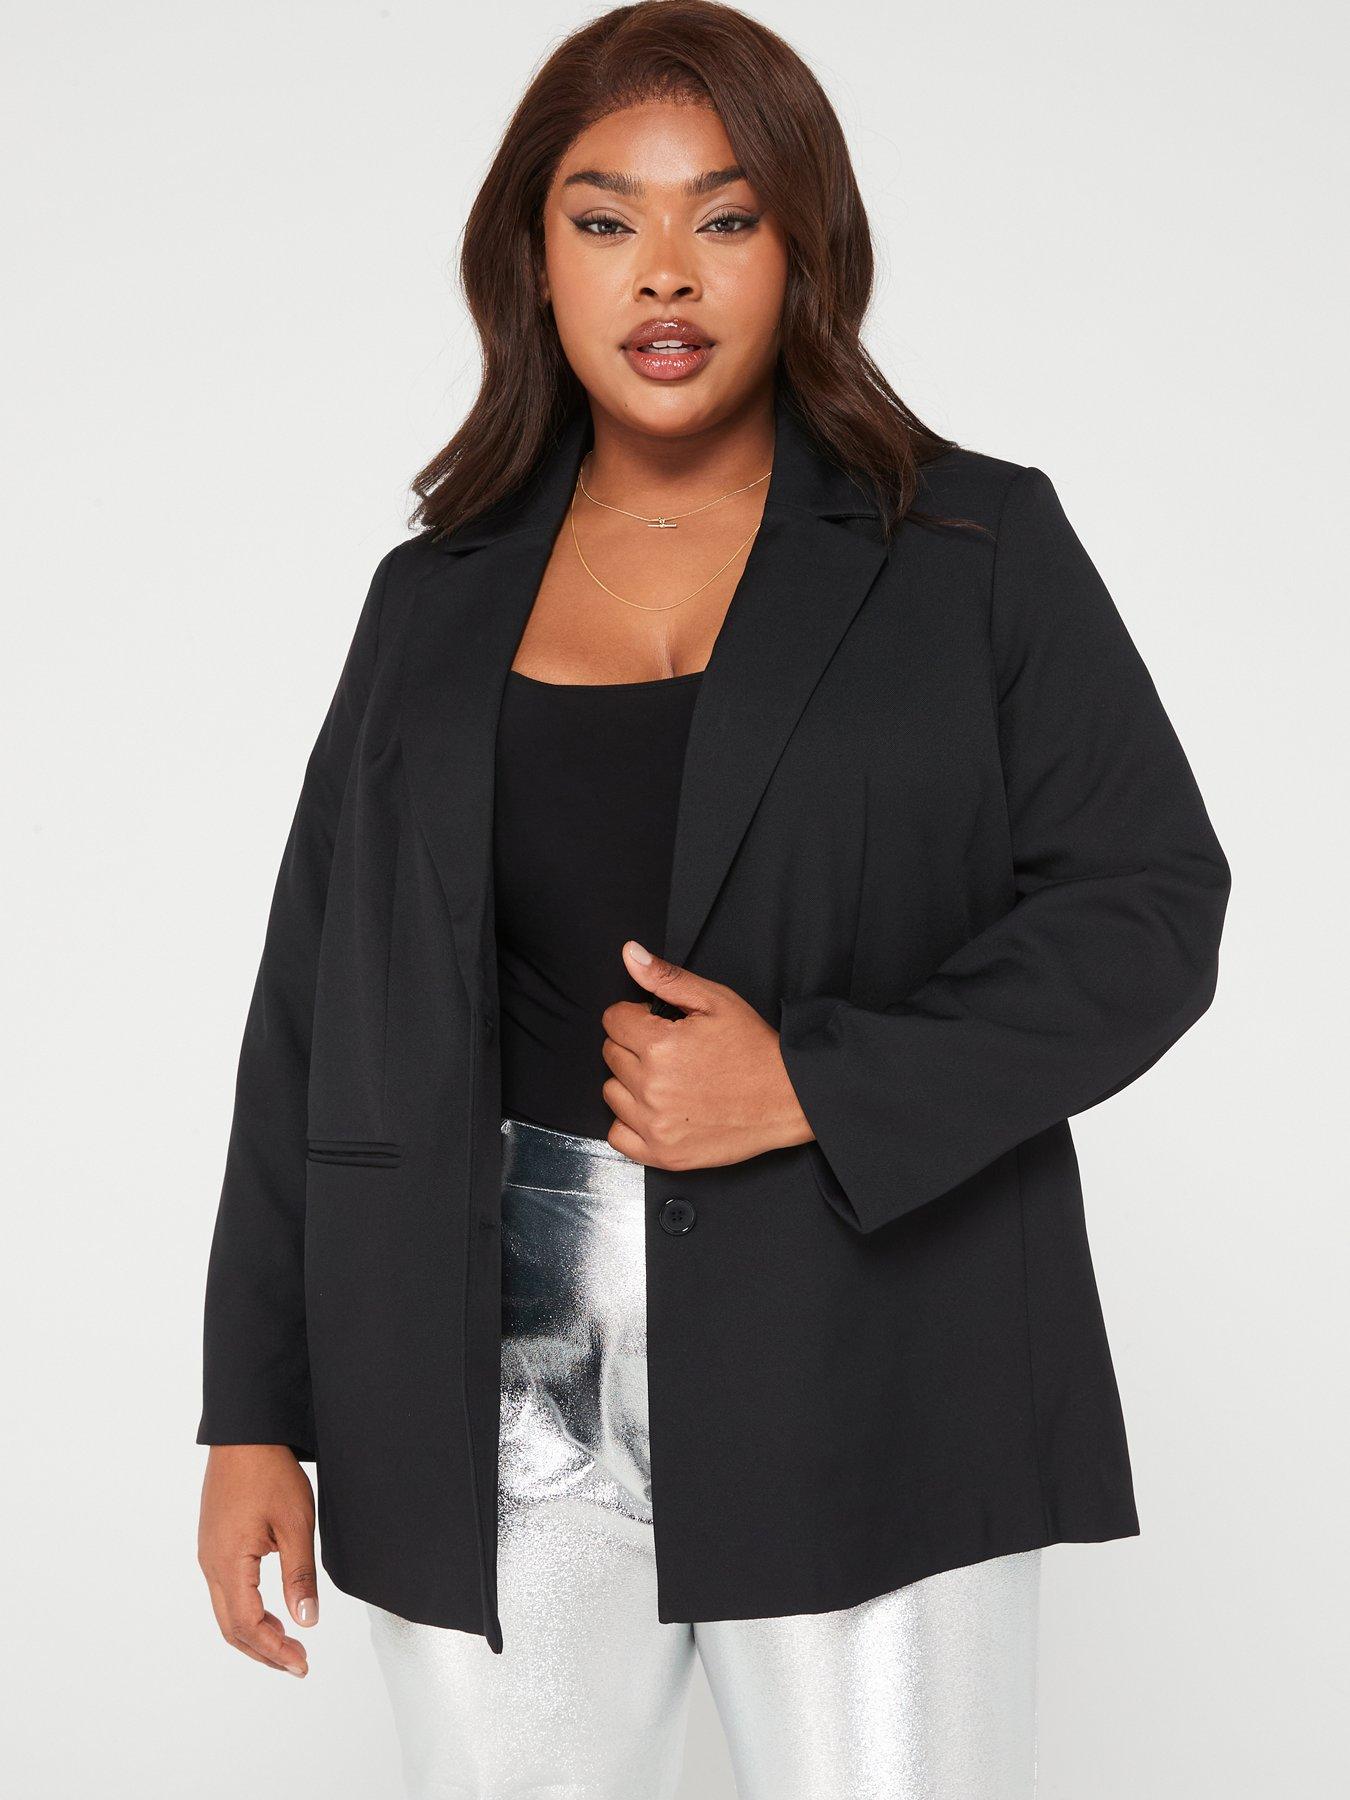 Twifer Jackets Womens Womens Plus Size Buttons Open Front Military Coat Ladies Office Jacket Outwear, Women's, Size: Large, Beige